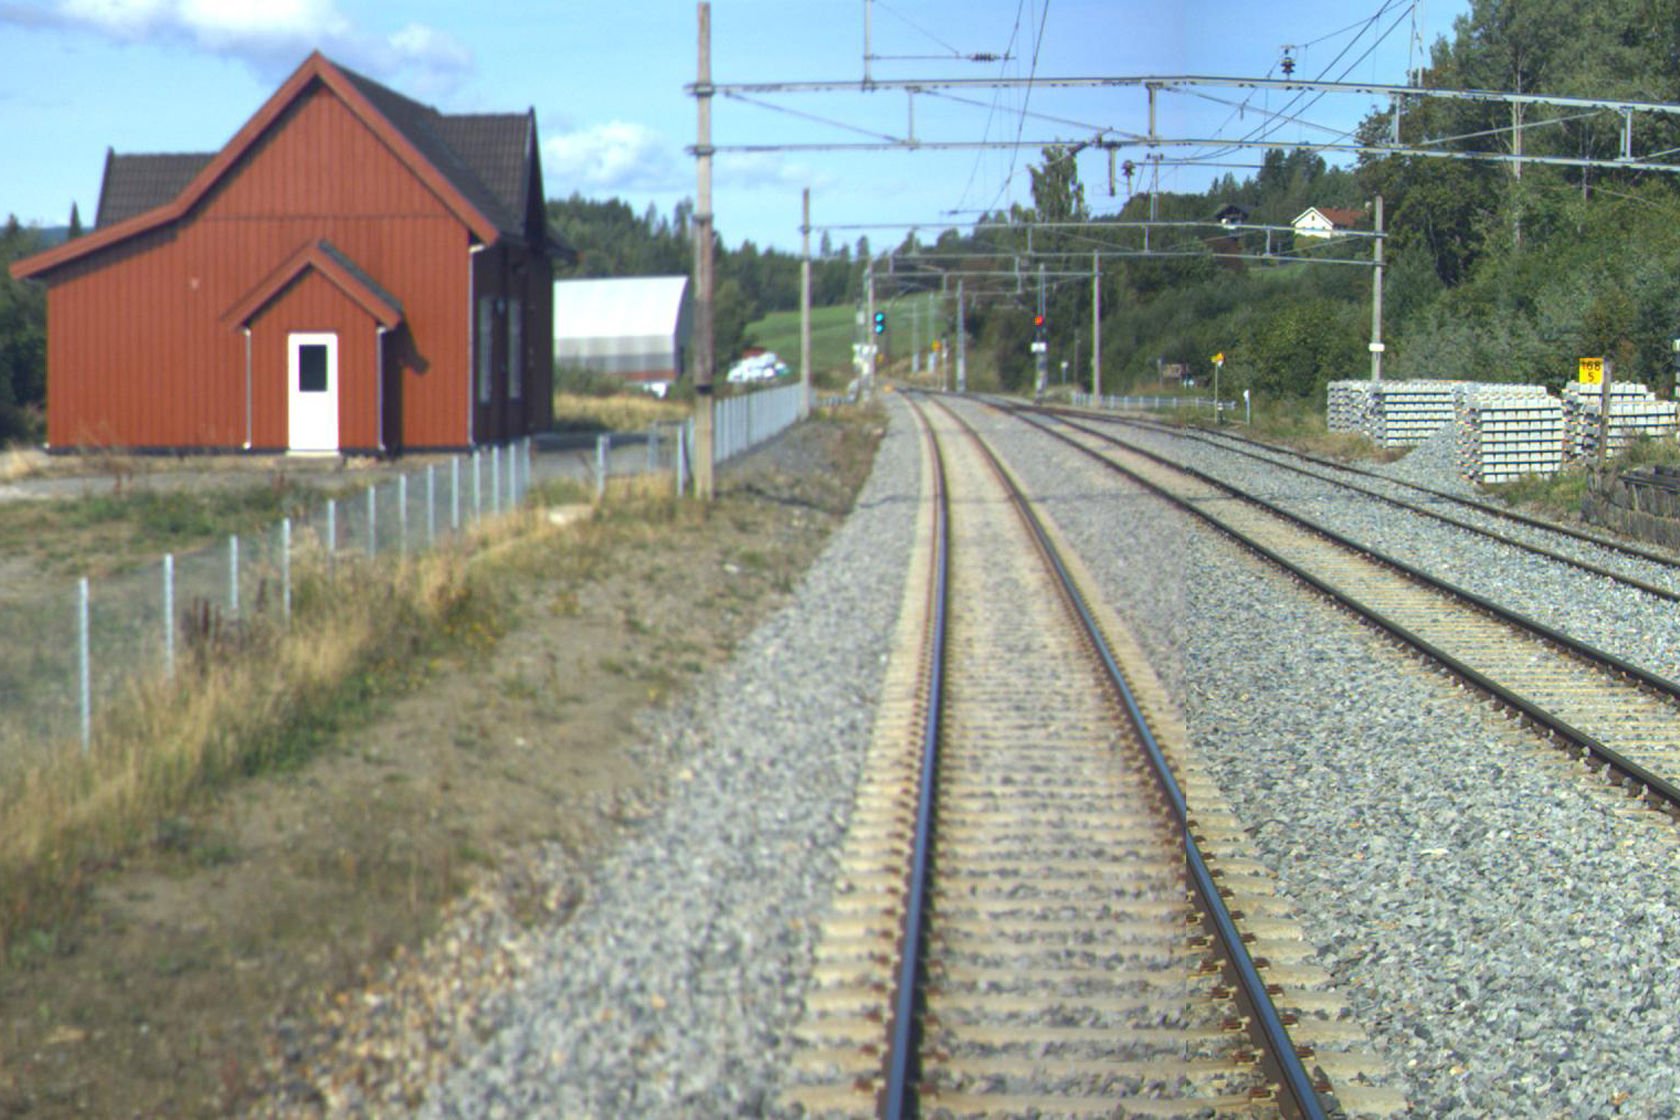 Tracks and station building at Brøttum station